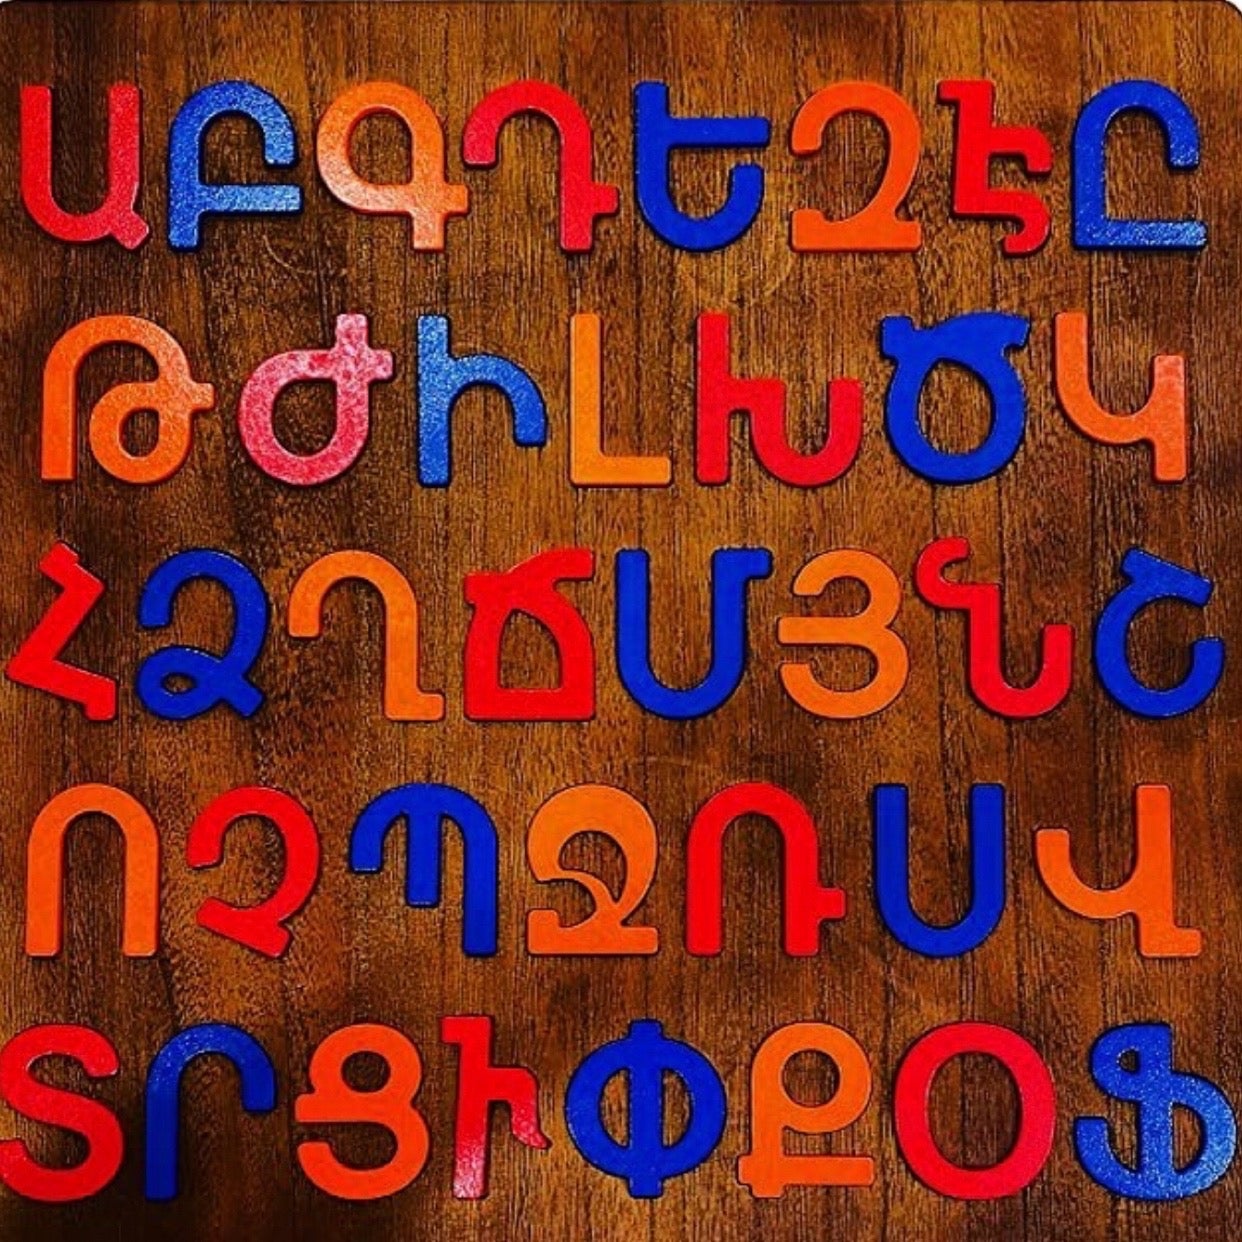 Armenian Alphabet 